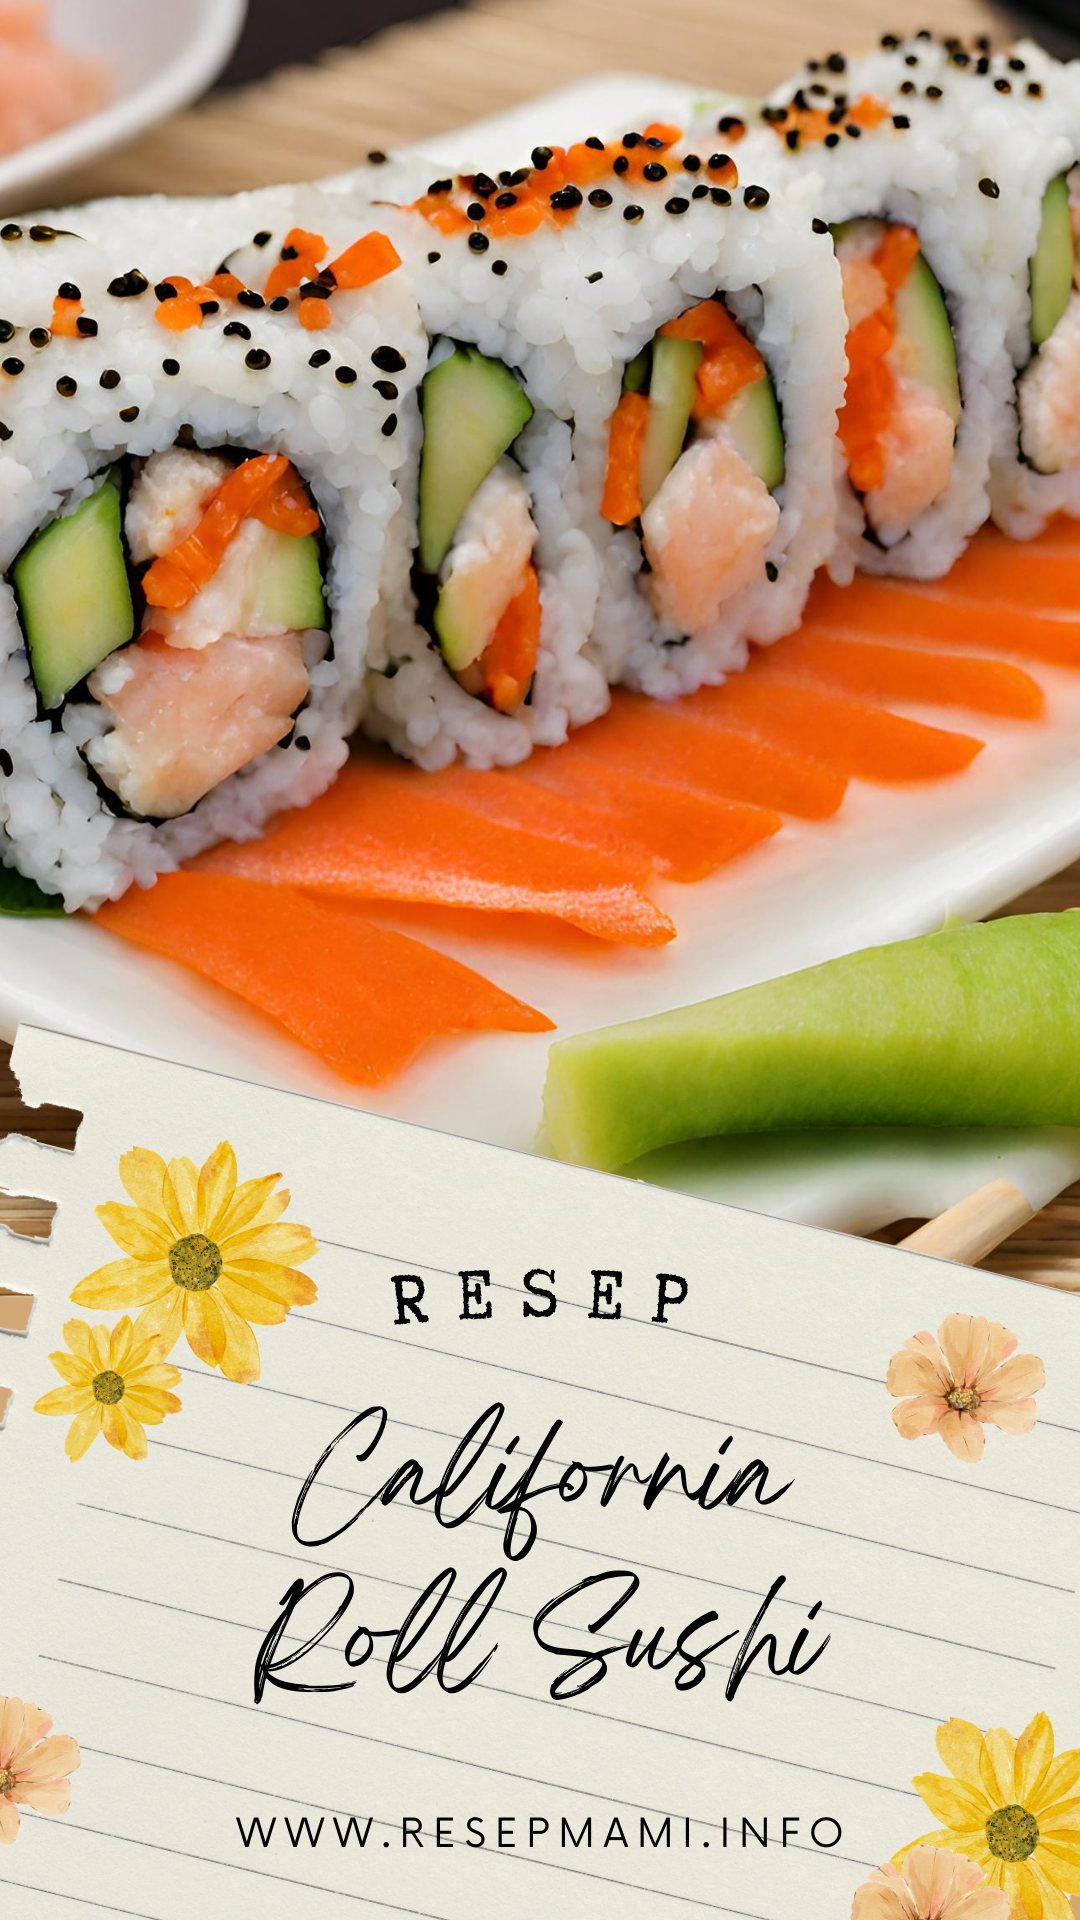 Resep California Roll Sushi
